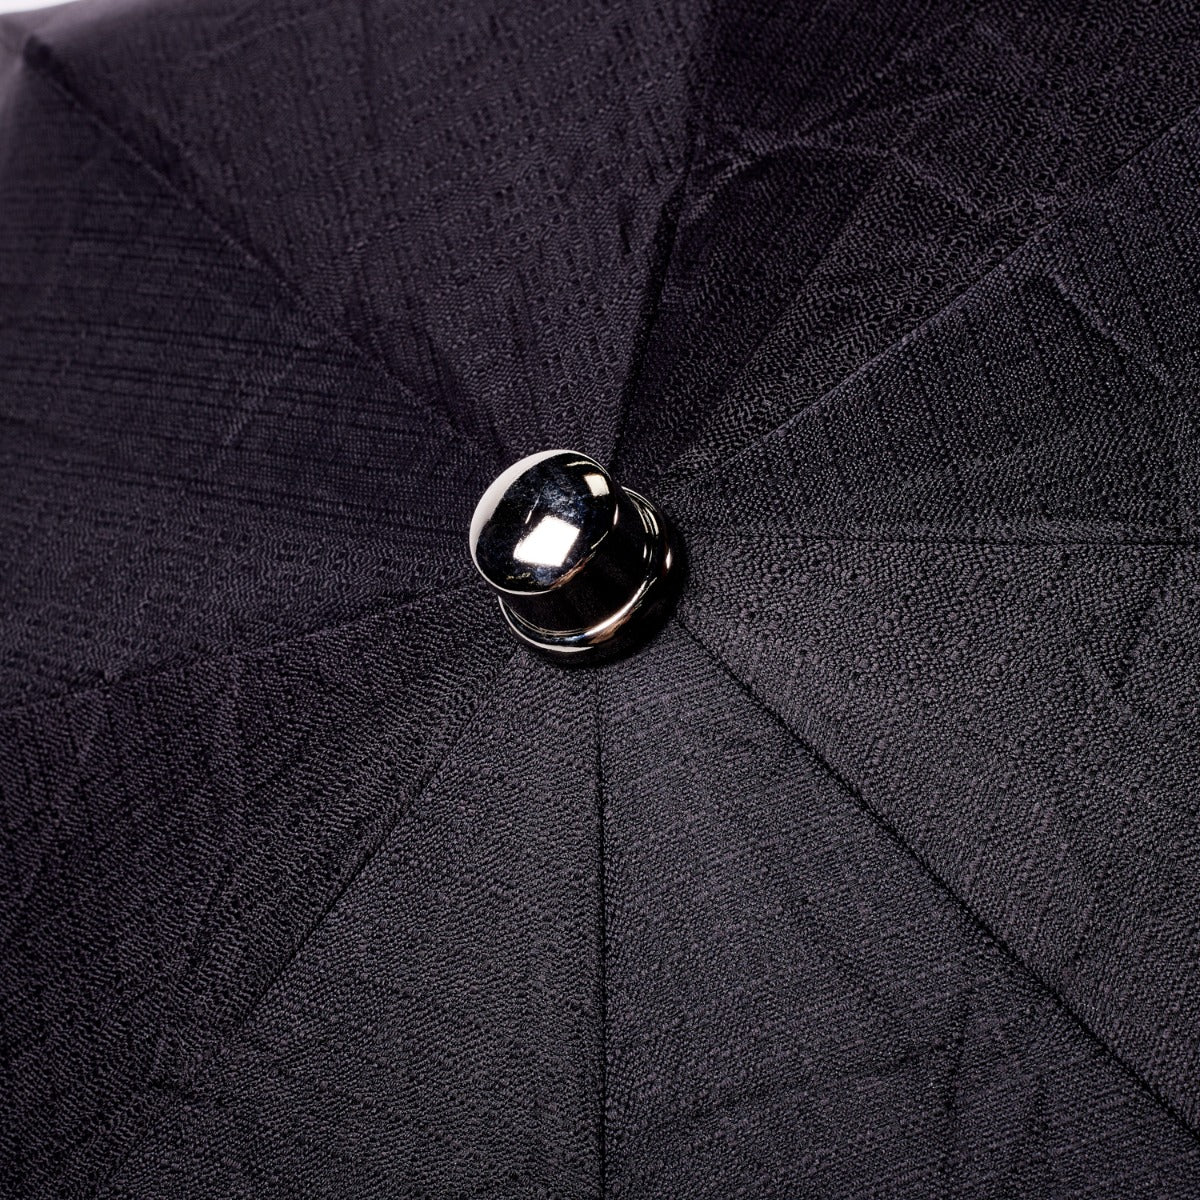 Brown Pigskin Travel Umbrella with Black Canopy